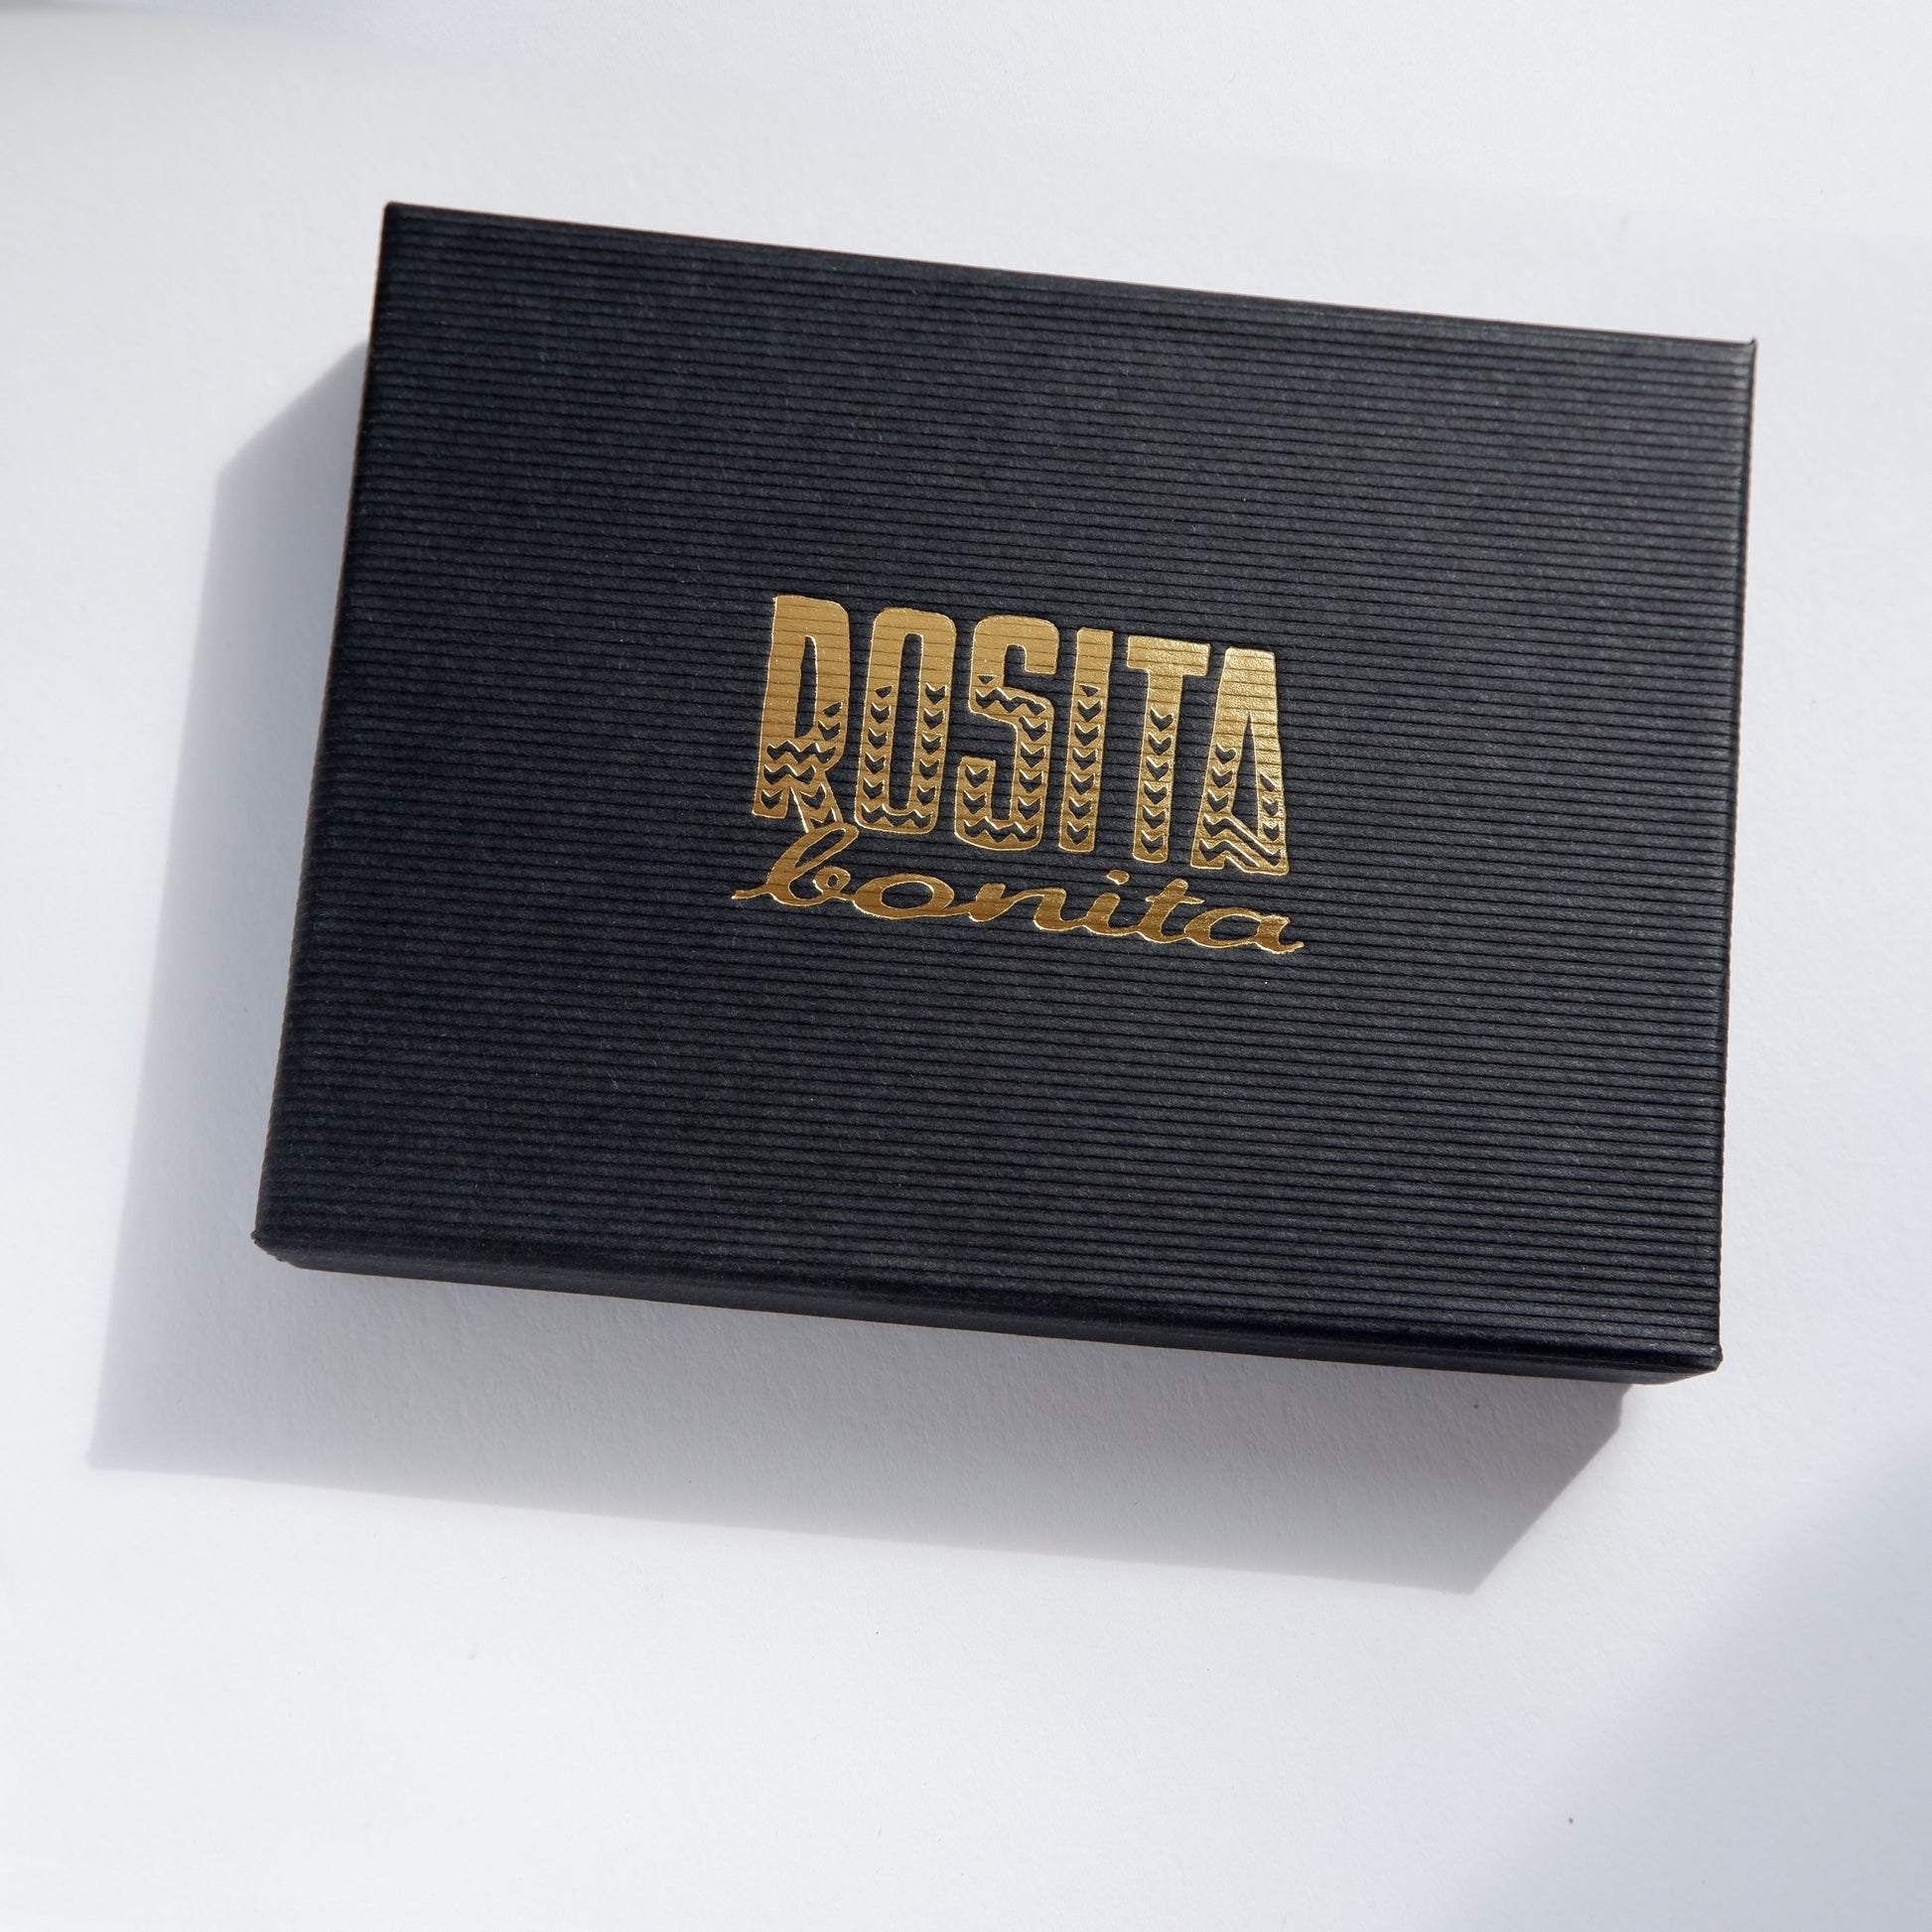 black pinstripe cardboard jewellery box, with rosita bonita logo in gold